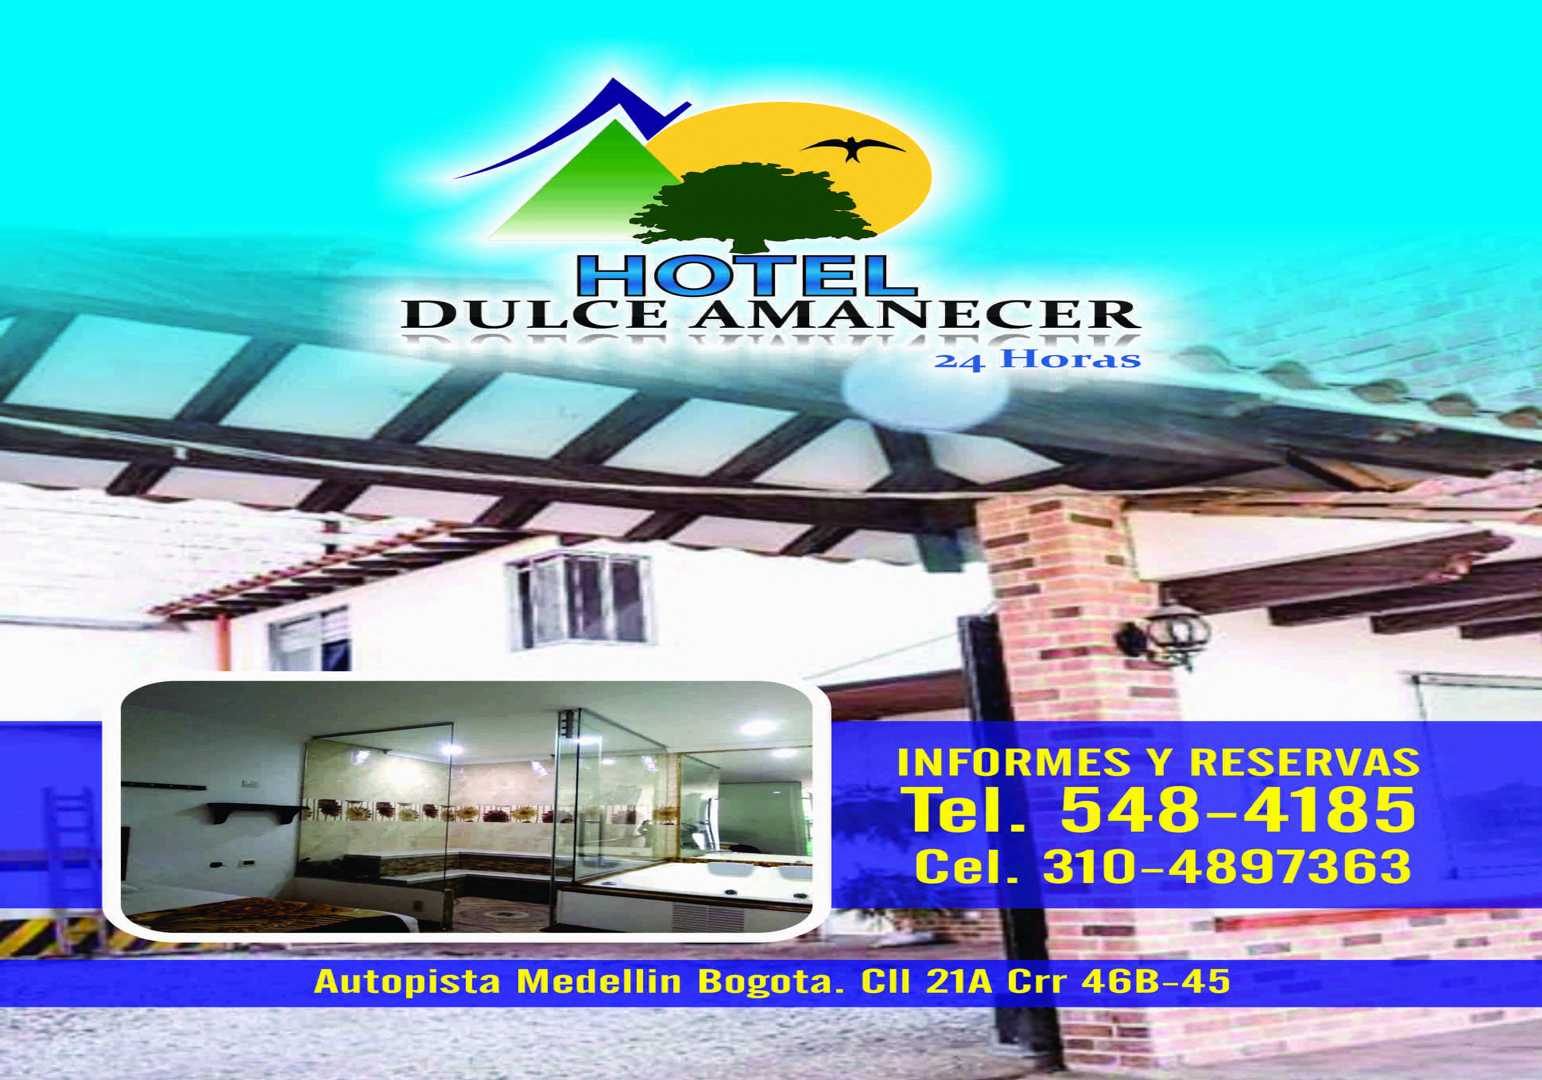 Hotel Dulce Amanecer - Marinilla Antioquia